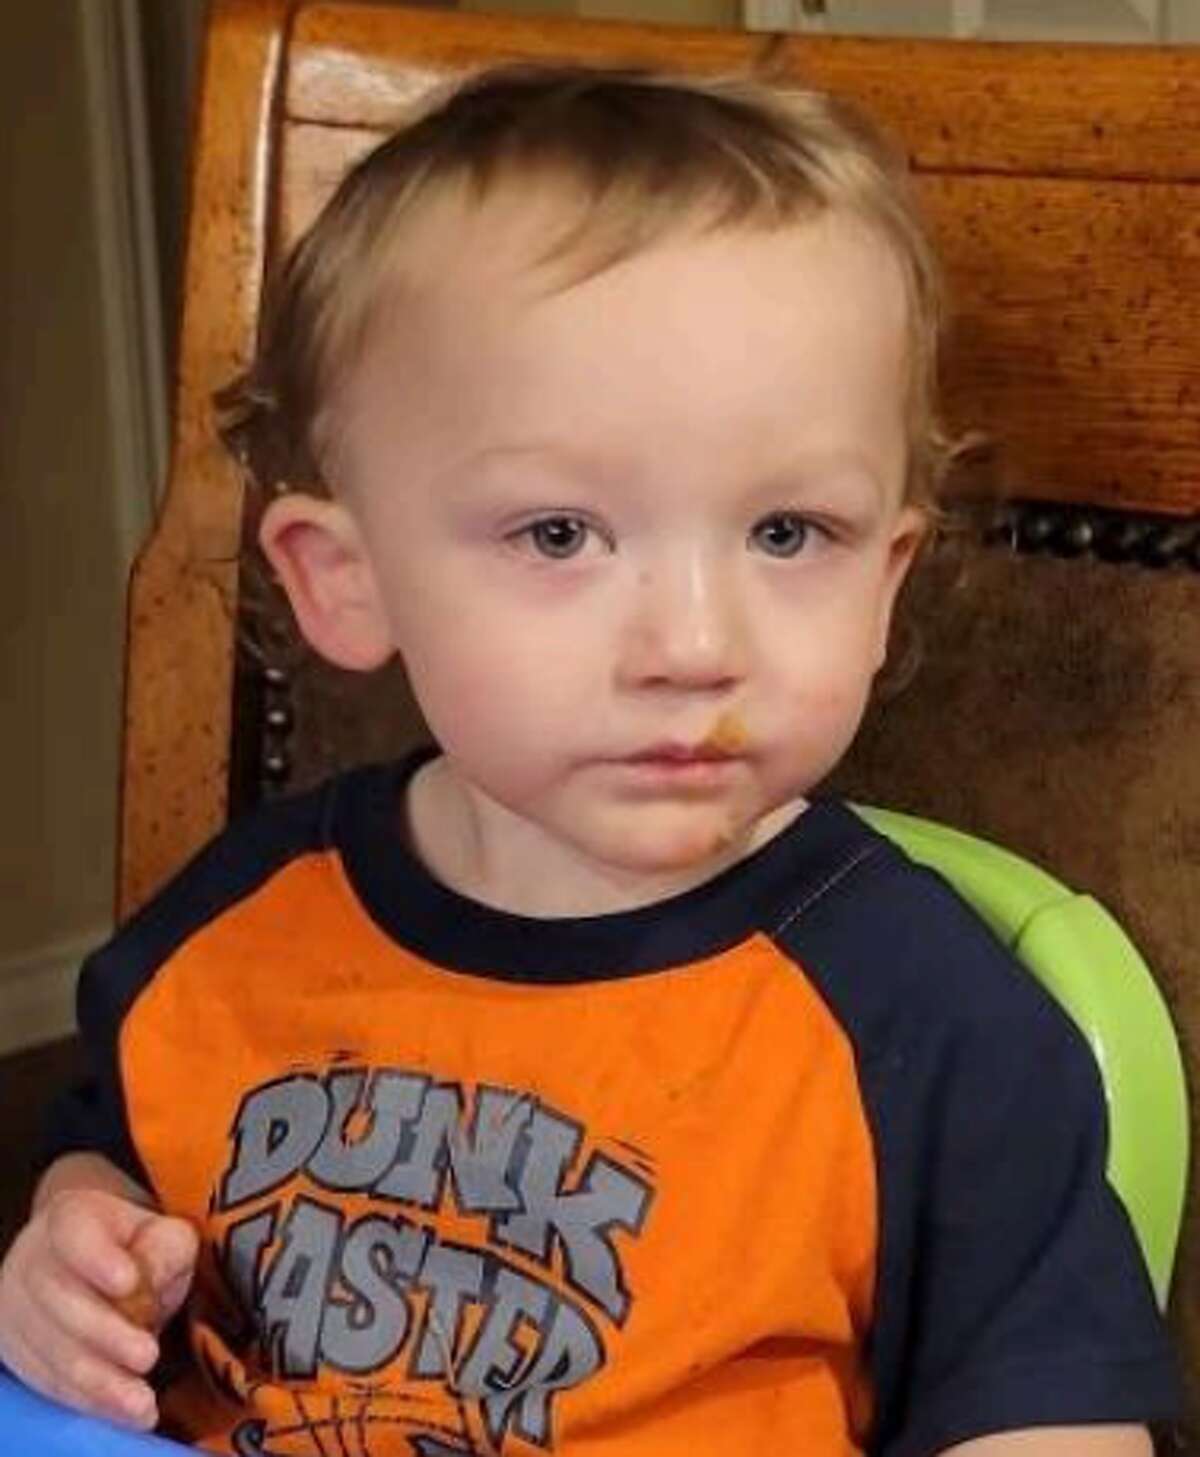 An Amber Alert has been issued for 2-year-old Kayeden Matthew Stutzman.